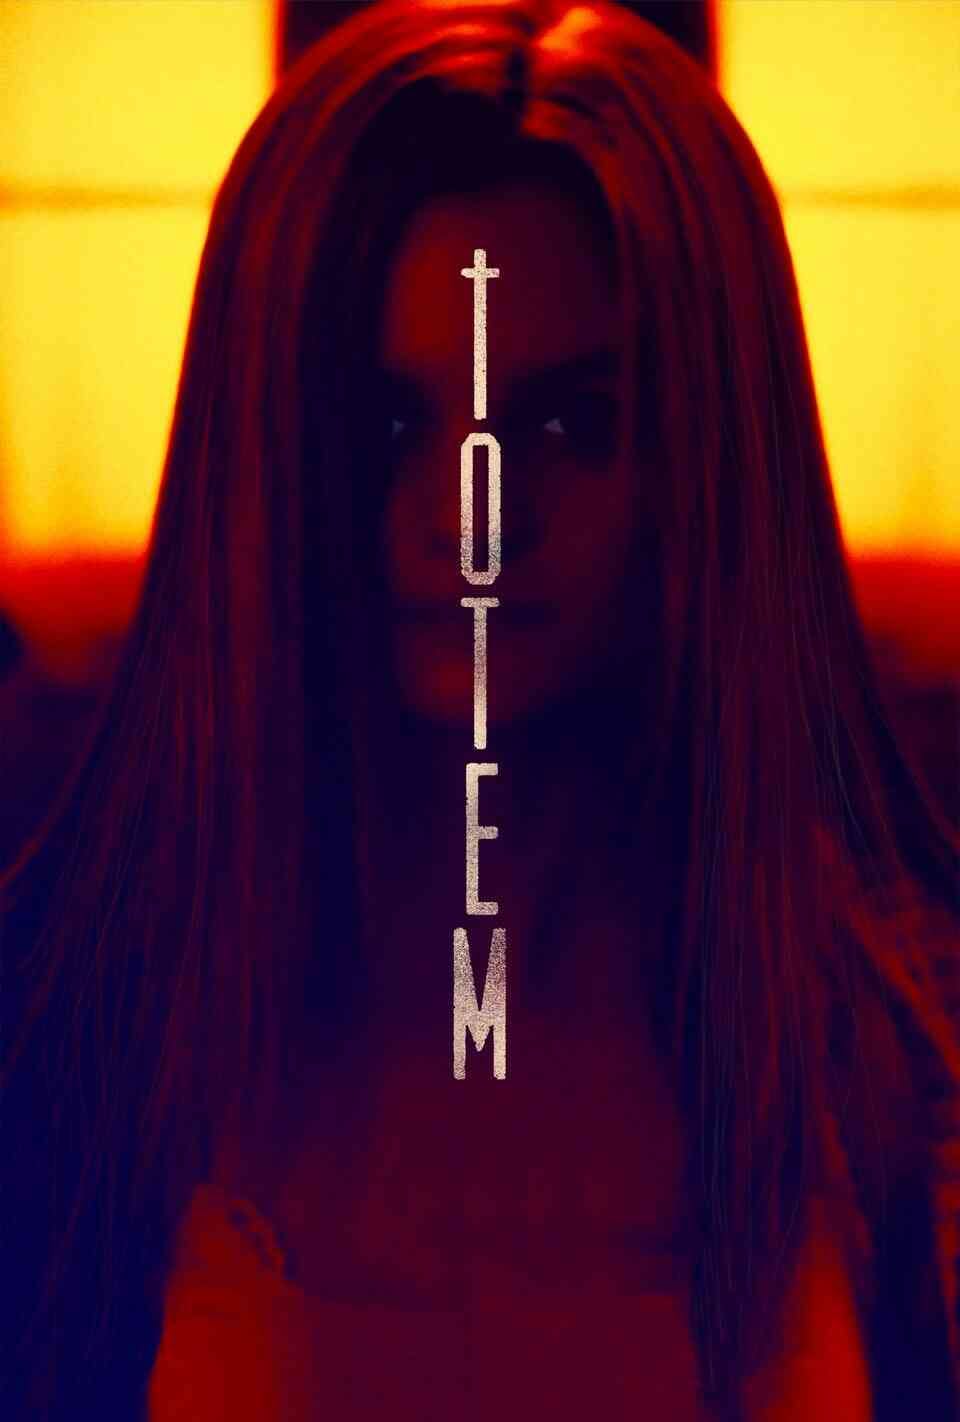 Read Totem screenplay (poster)